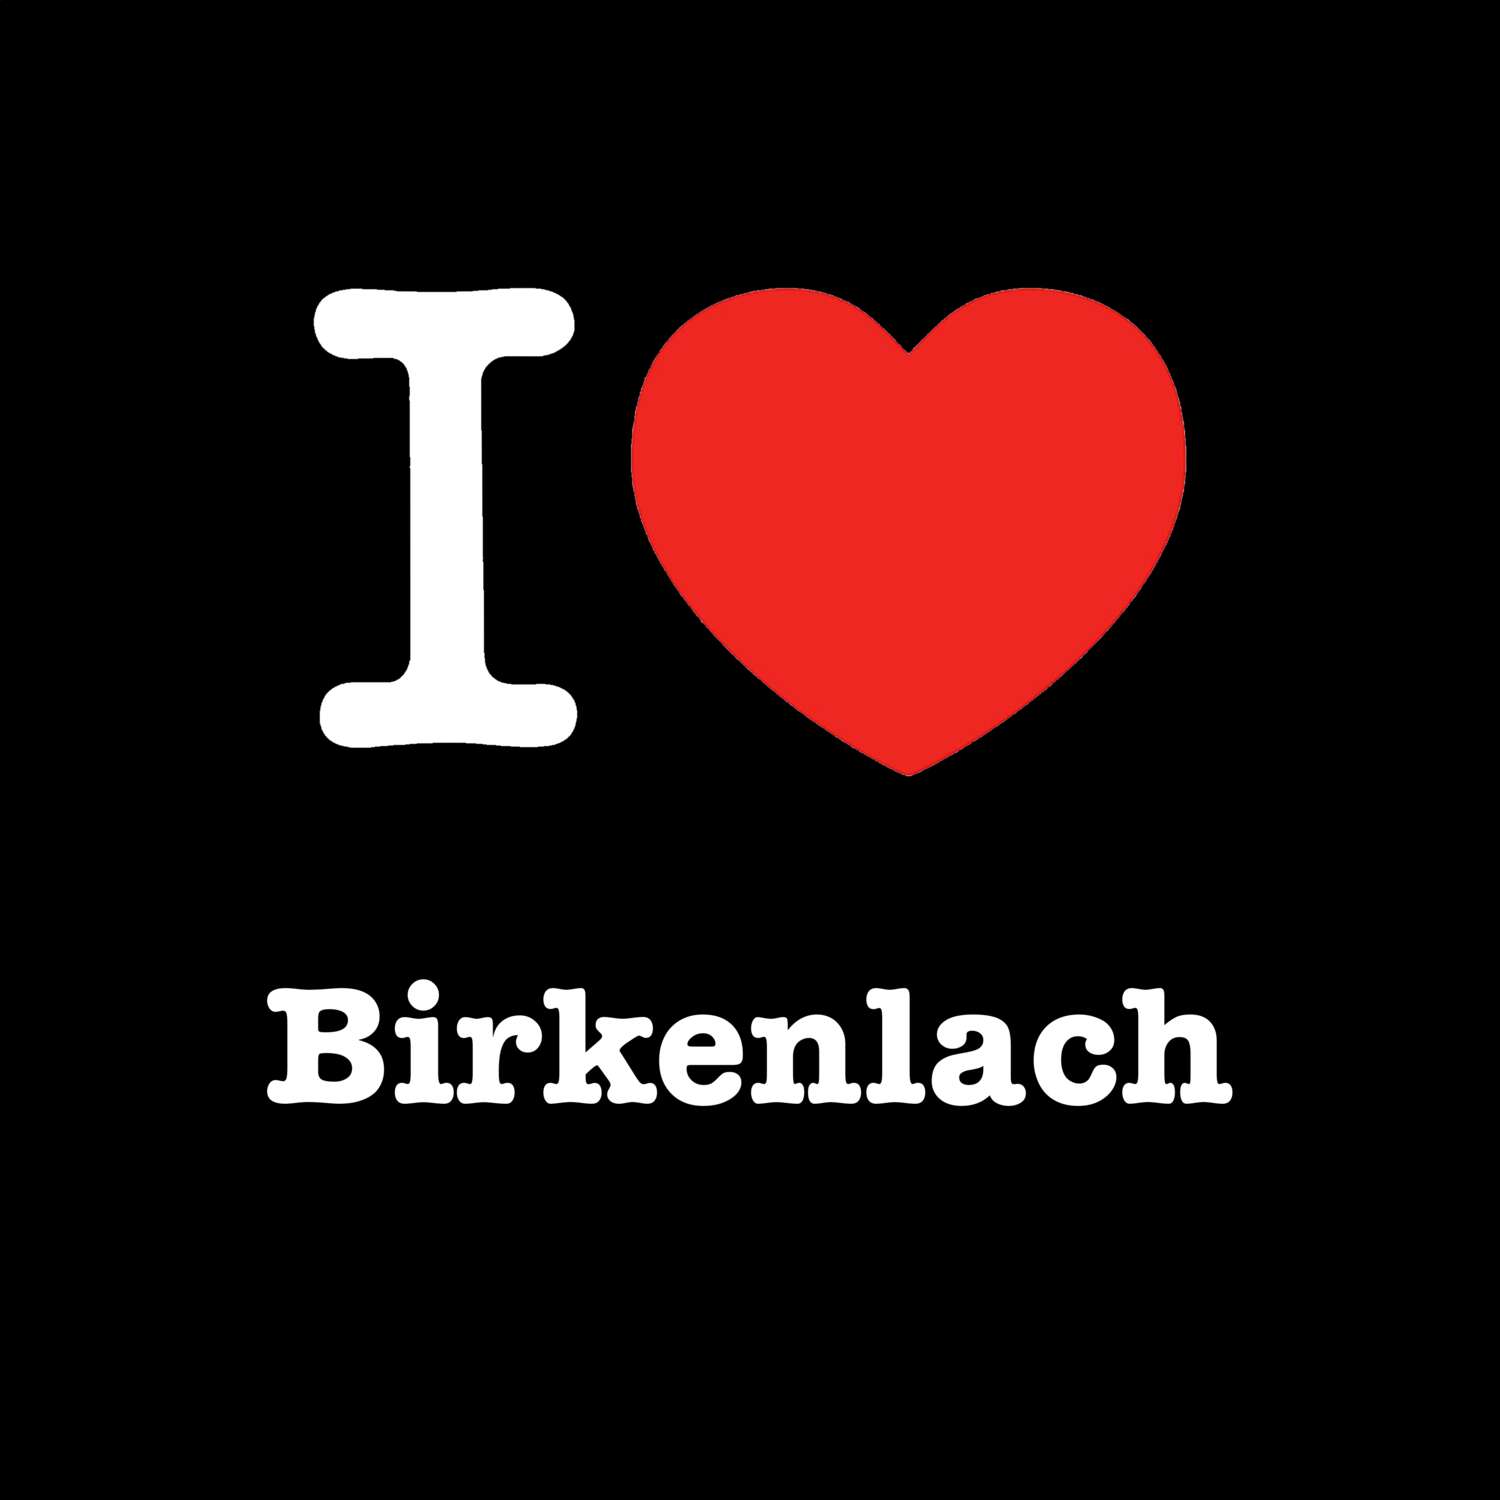 Birkenlach T-Shirt »I love«